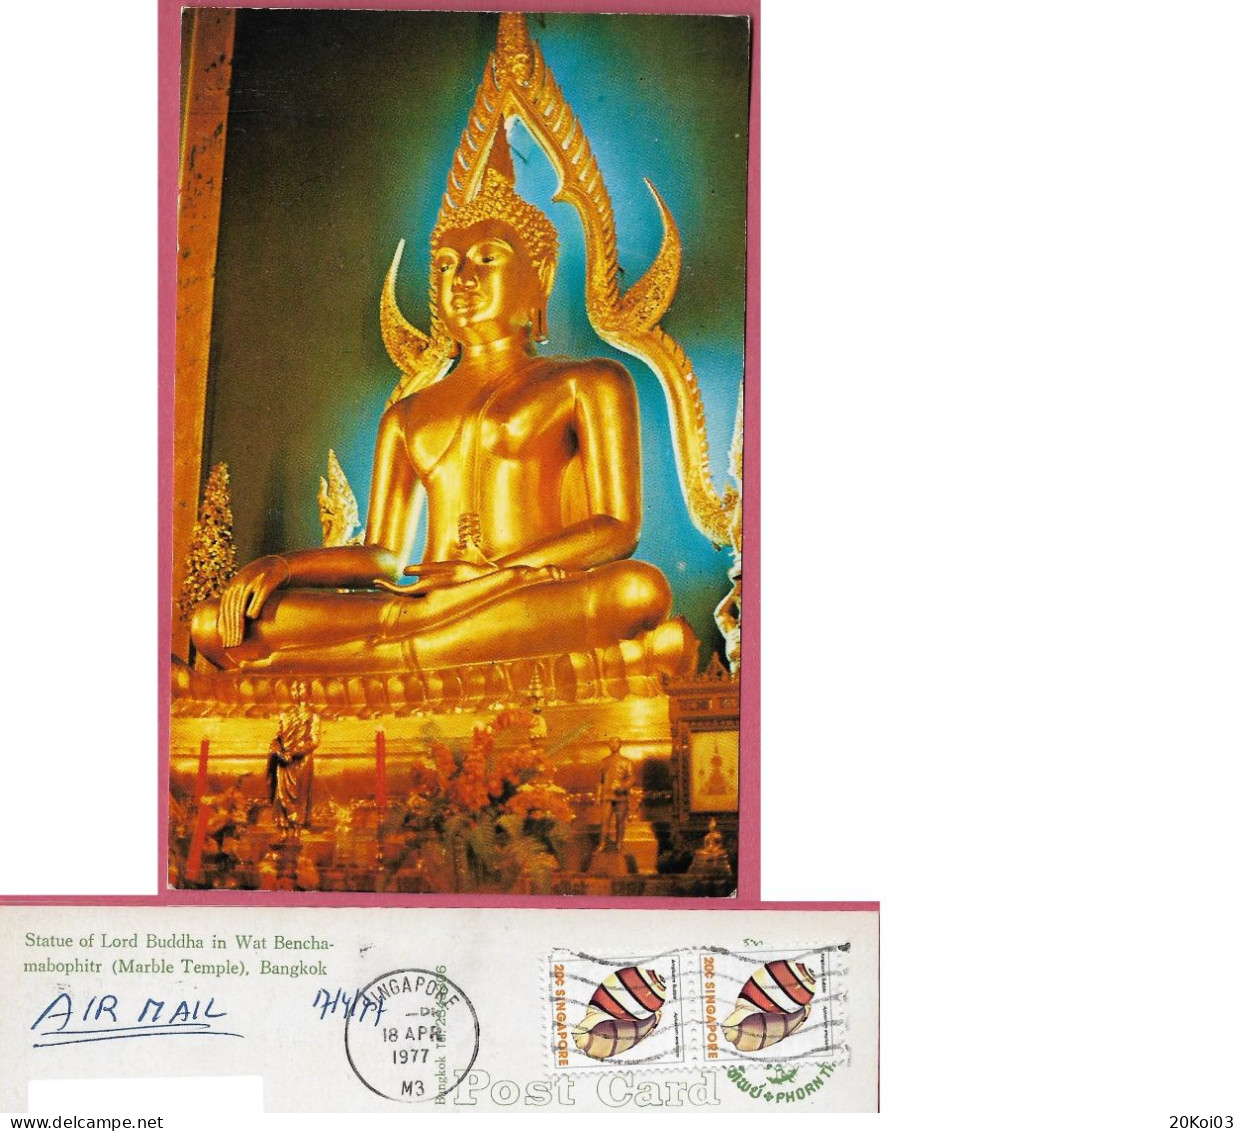 Statue Of Lord Buddha In Wat Benchamabophitr (Marble Temple) Bangkok, Thailand 1977_TTB_No 1247 PHORN THIP_cpc - Thaïland